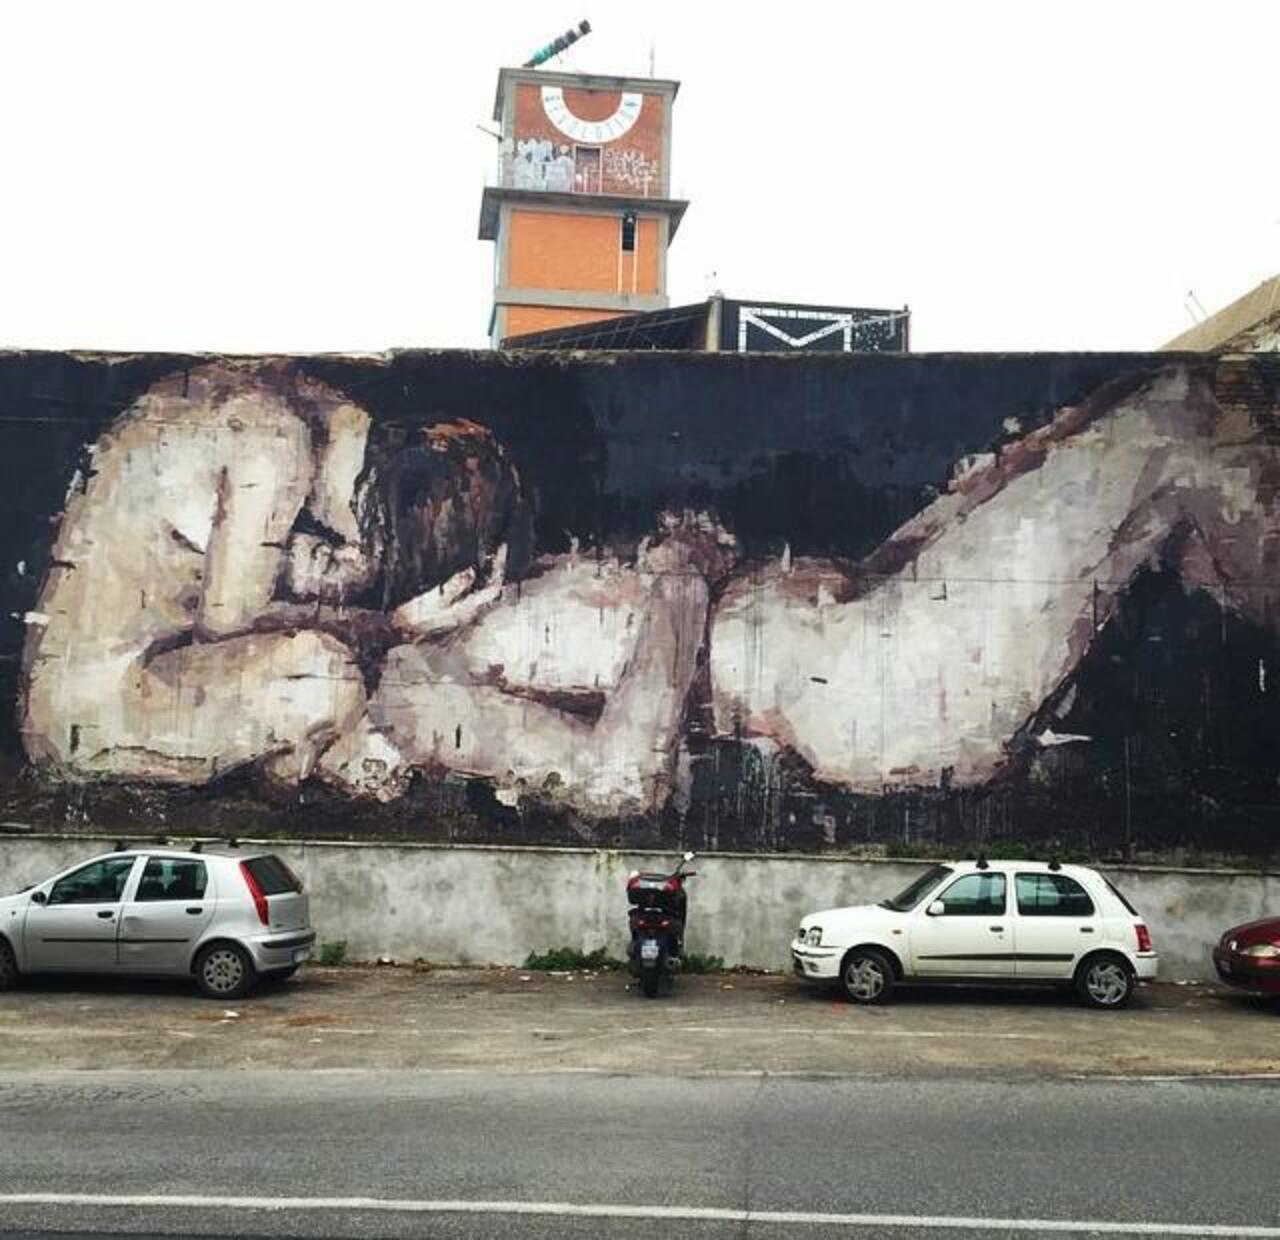 “@GoogleStreetArt: Street Art by Borondo#art #mural #graffiti #streetart http://t.co/twEUaSMWkG”